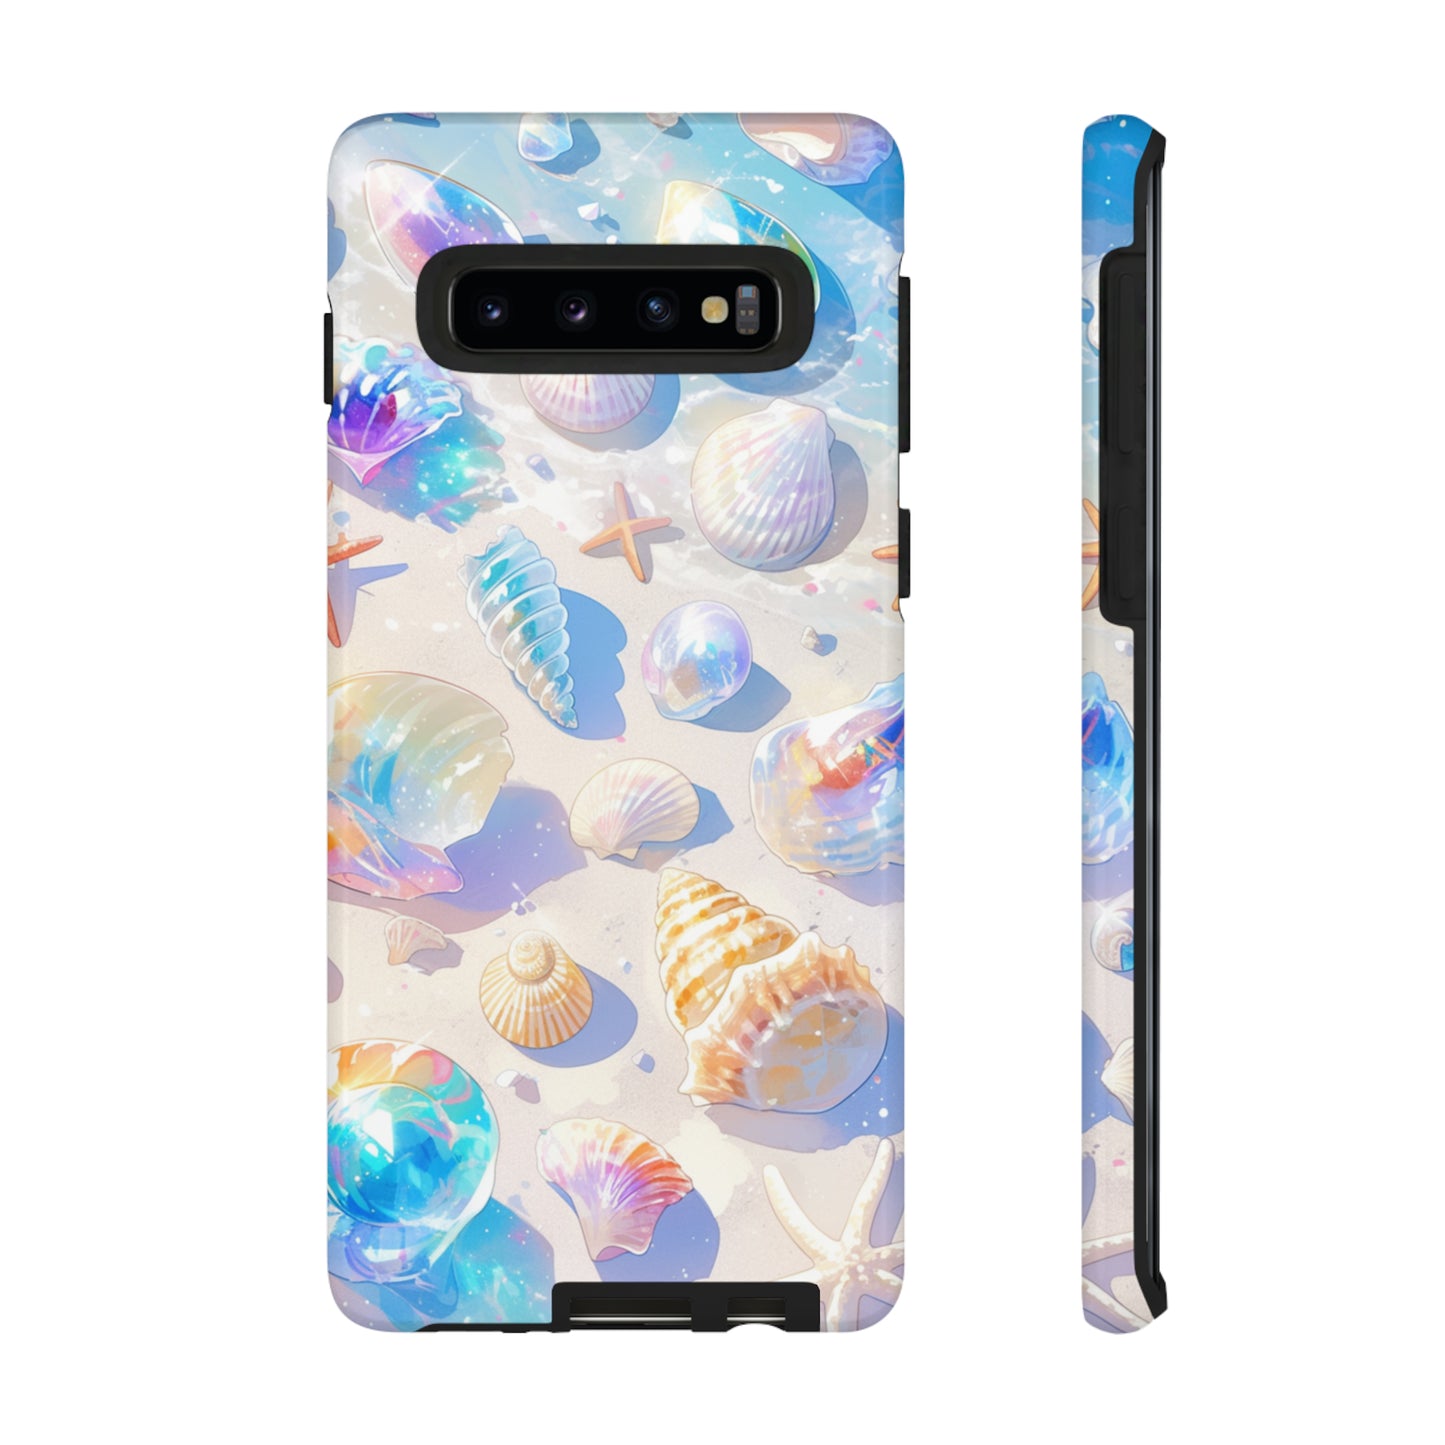 Summer Watercolor Treasure: Cute Beach, Seashell, and Starfish Phone Case For iPhones & Samsung Galaxy Phones